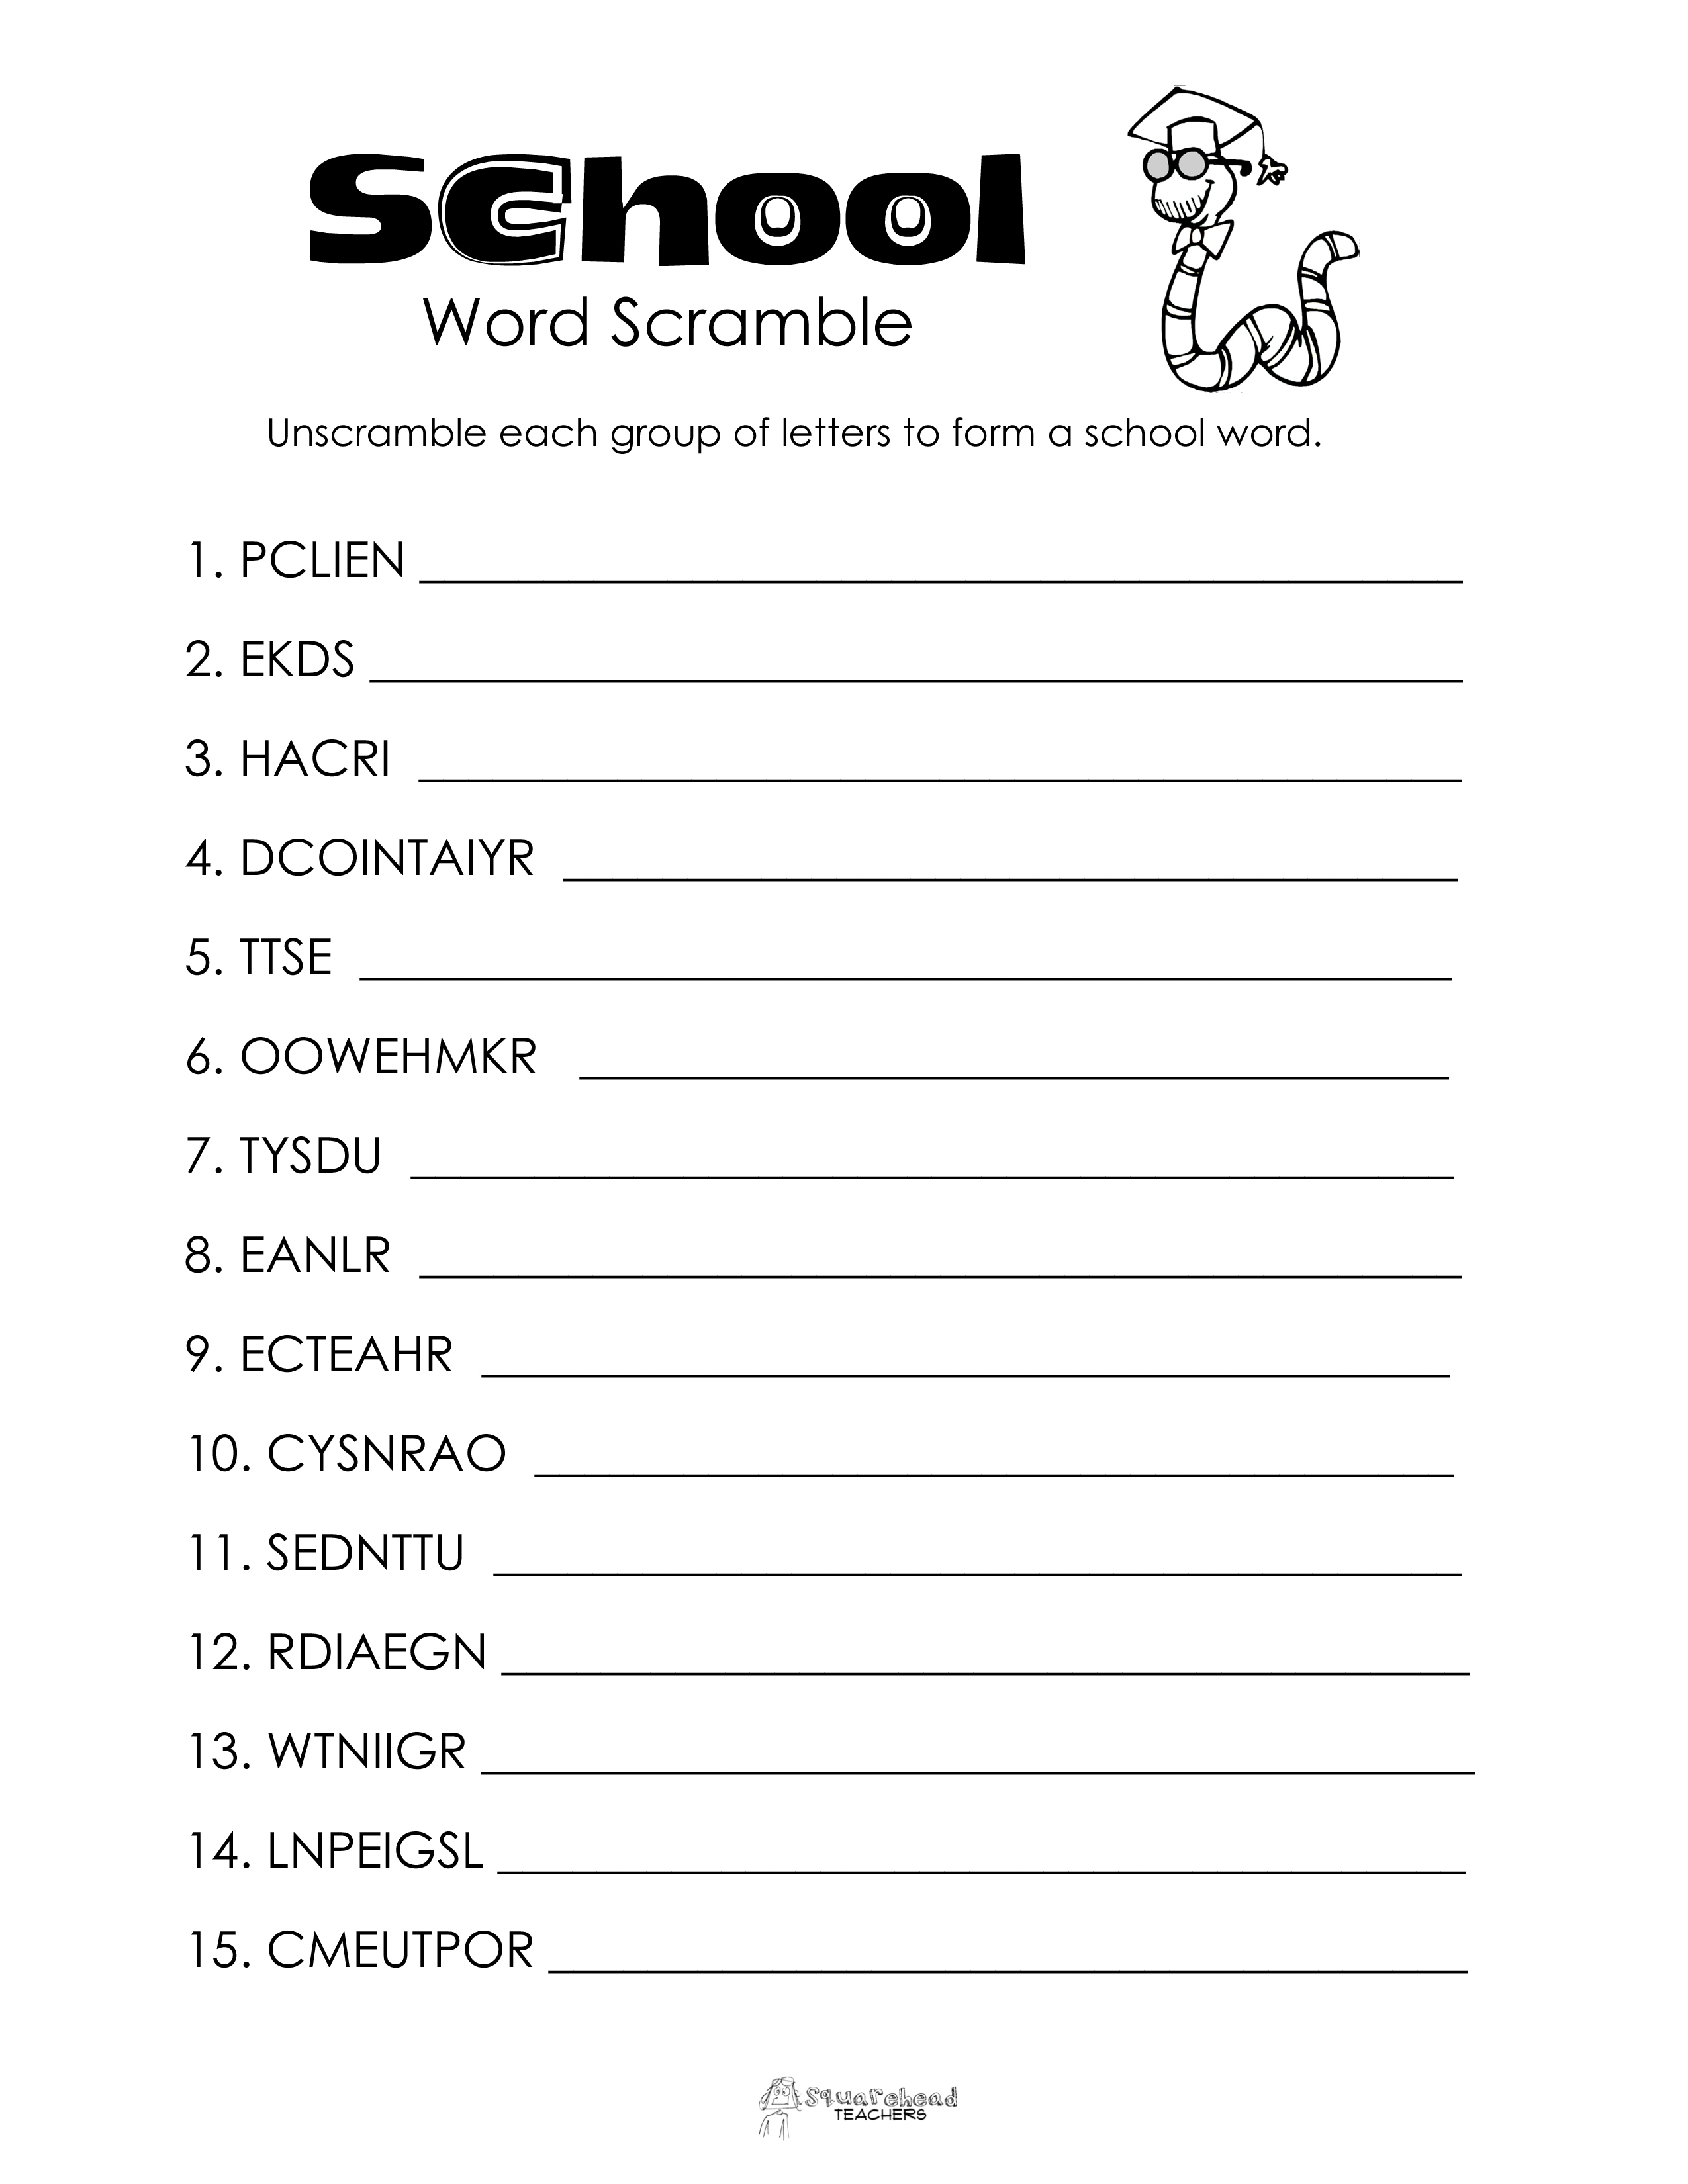 Word Scramble Maker World Famous From The Teacher s Corner Free Printable Word Scramble 